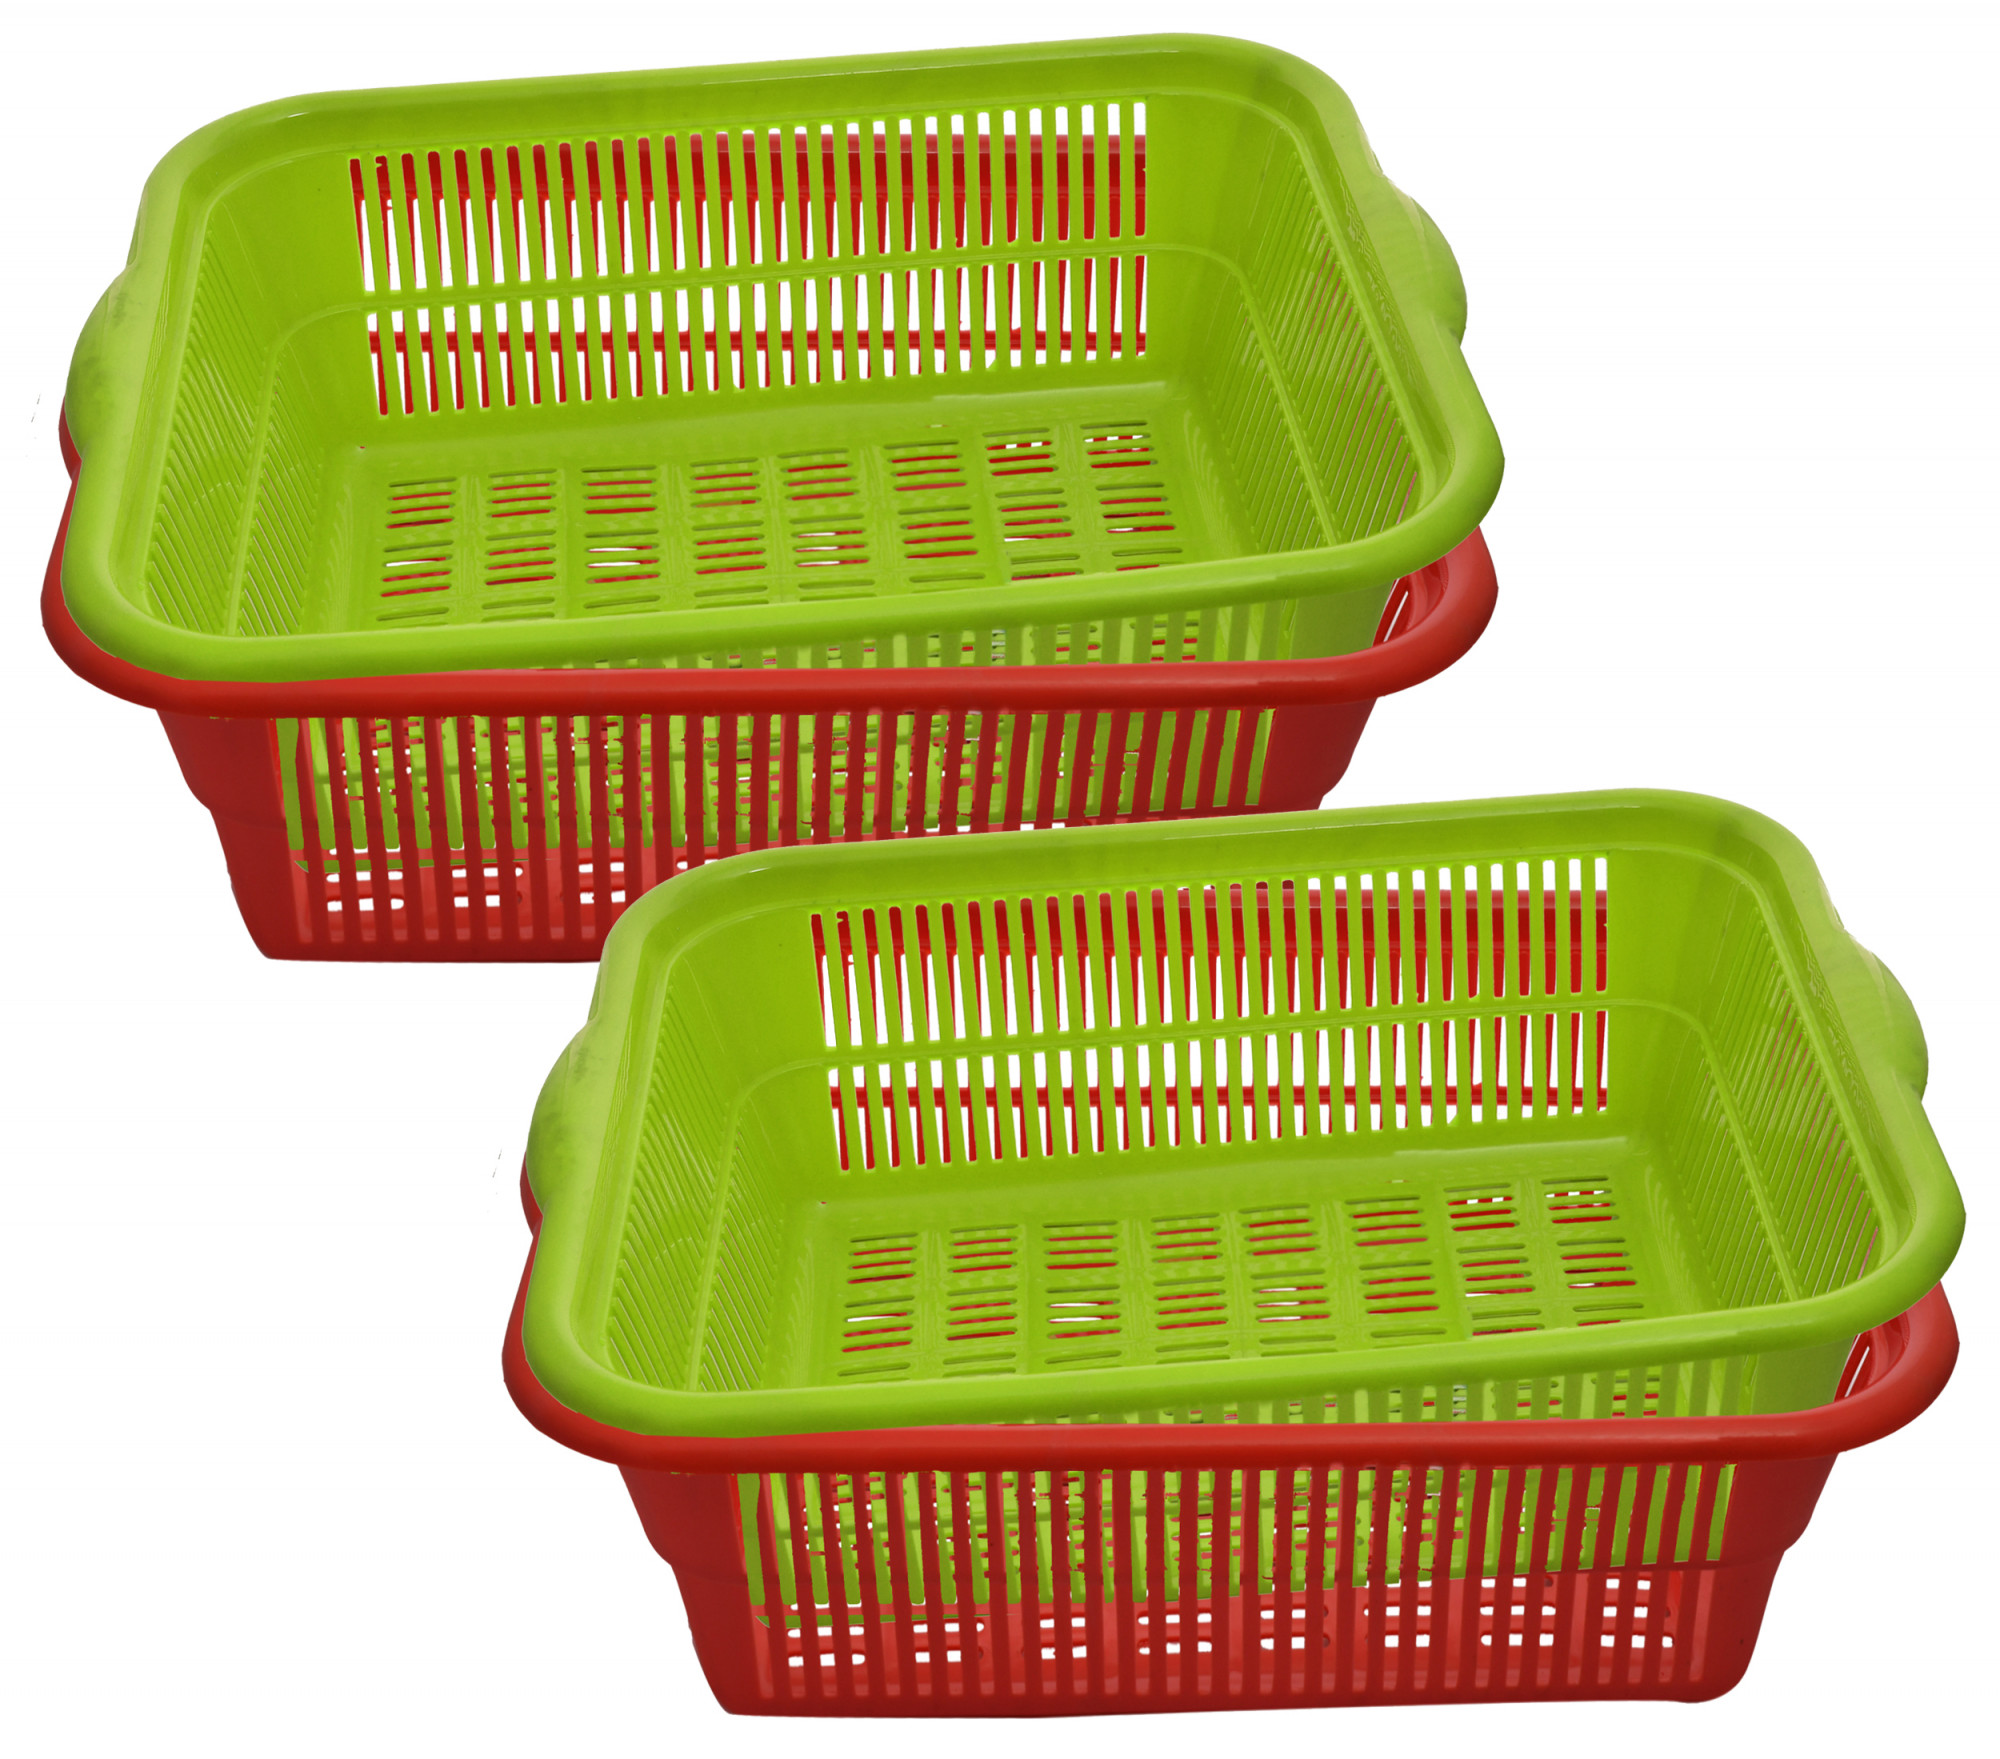 Kuber Industries Plastic Kitchen Dish Rack Drainer Vegetables And Fruits Basket Dish Rack Multipurpose Organizers ,Medium Size,Green & Red